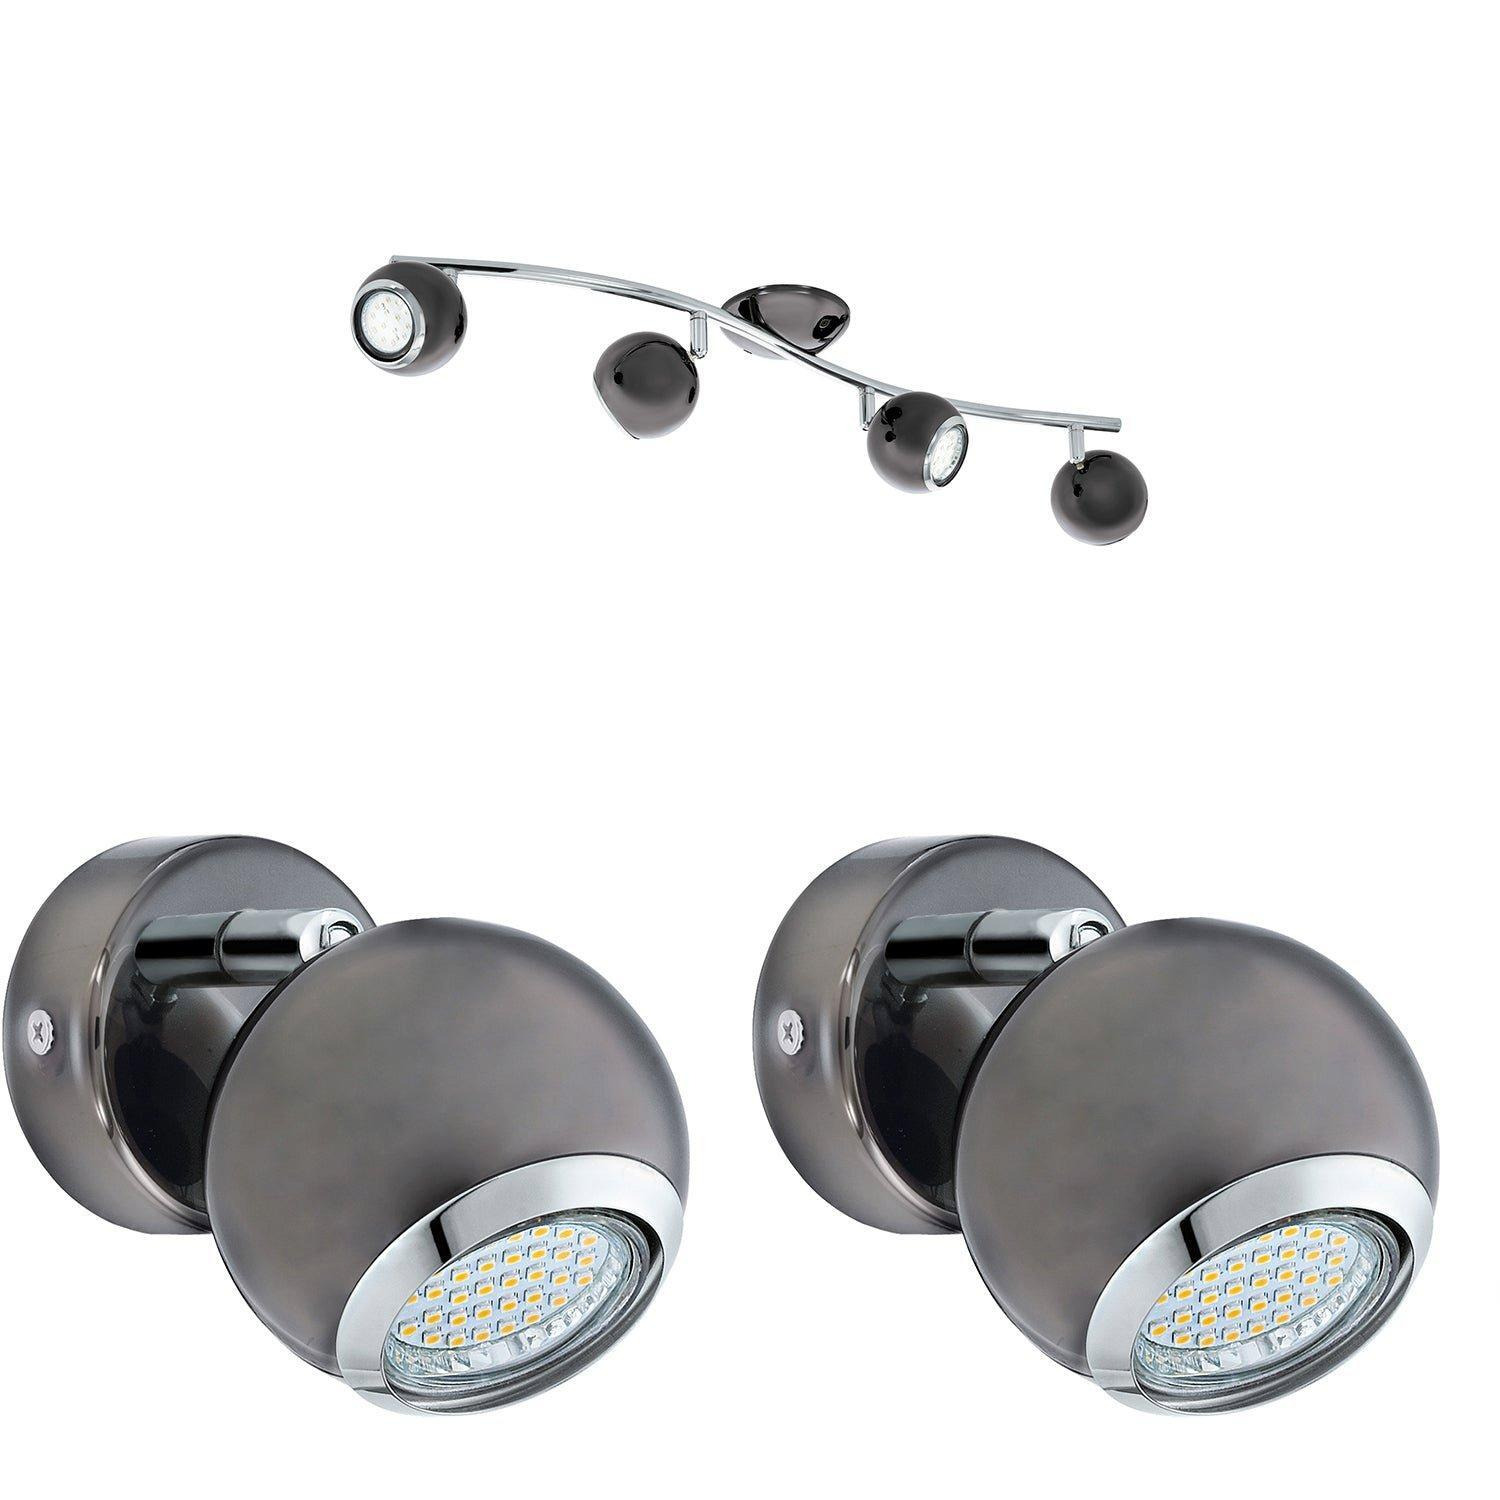 Quad Ceiling Spot Light & 2x Matching Wall Lights Black Nickel Adjustable Shade - image 1